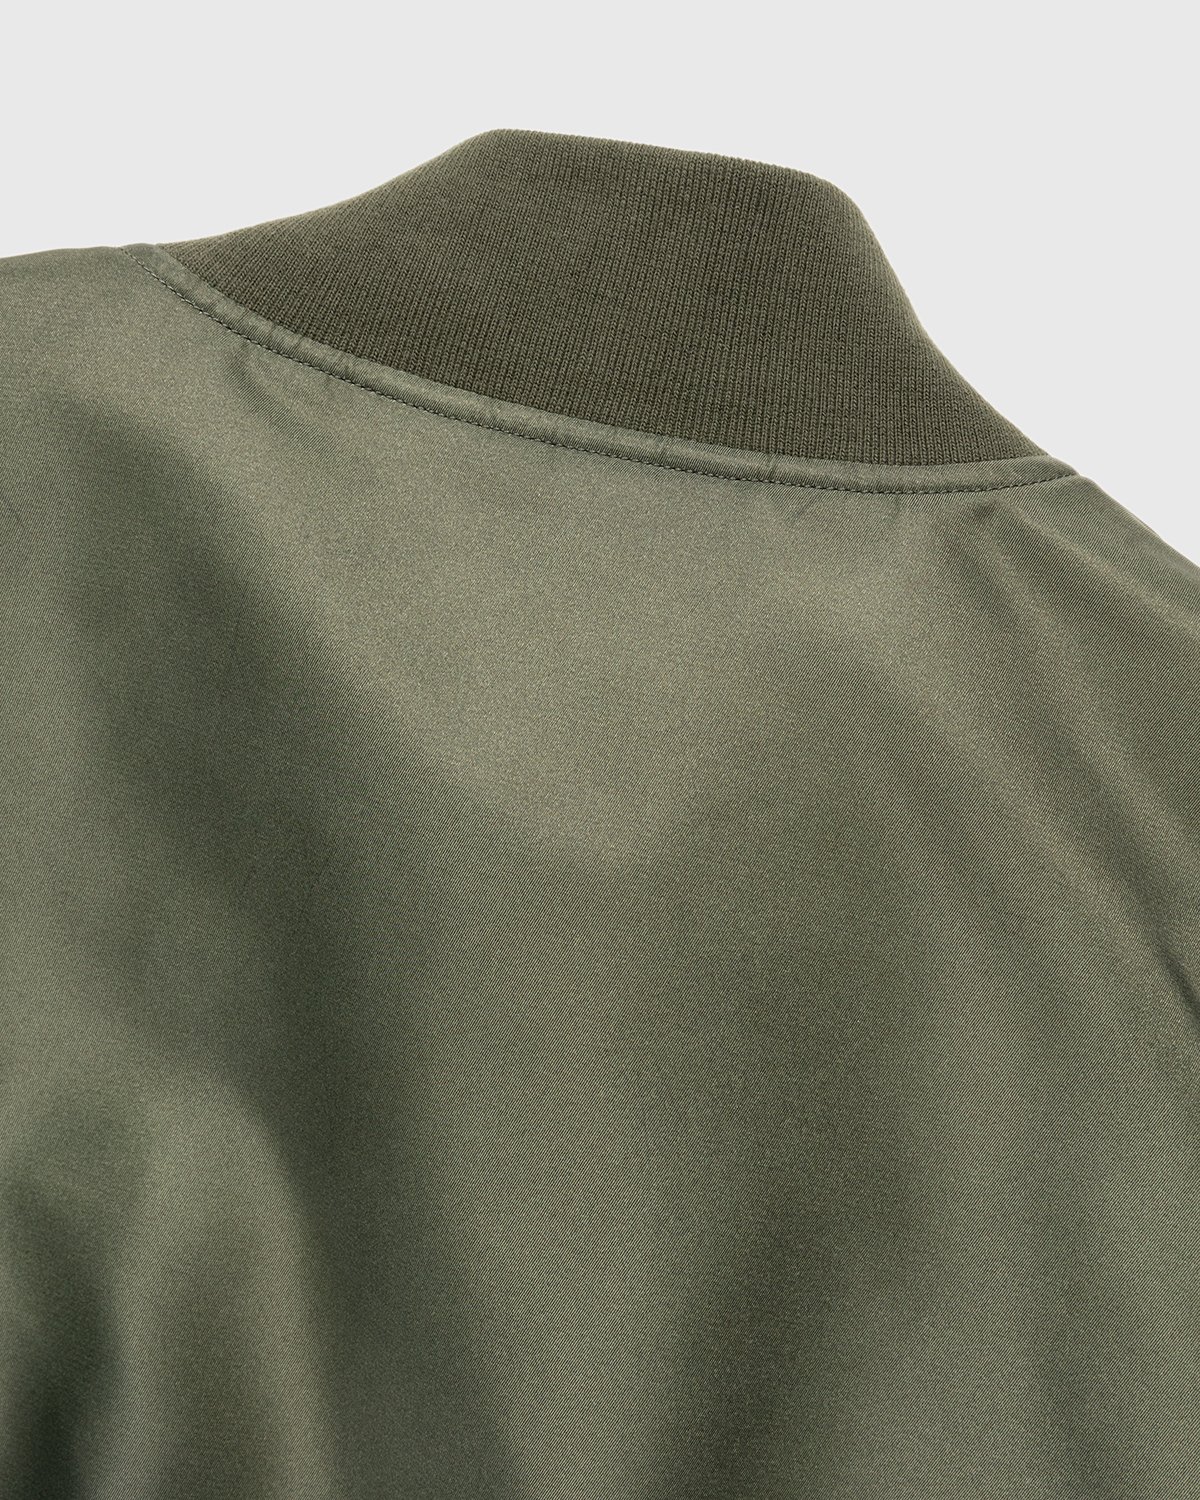 Acne Studios - Satin Bomber Jacket Olive Green - Clothing - Green - Image 4